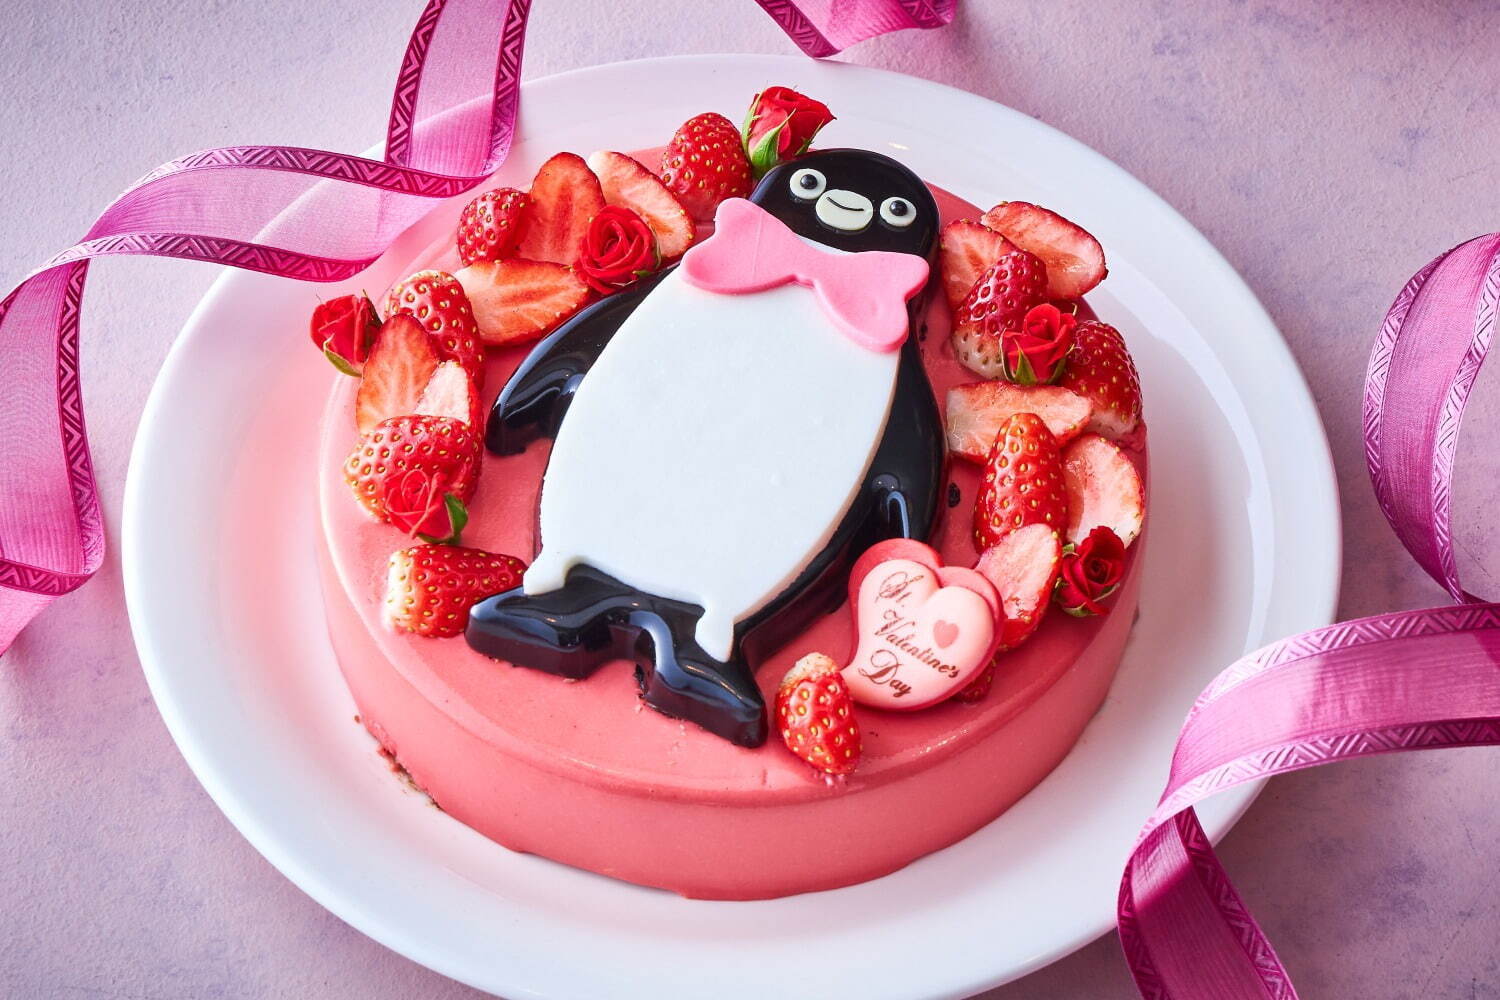 「Suicaのペンギン バレンタインケーキ」6,000円